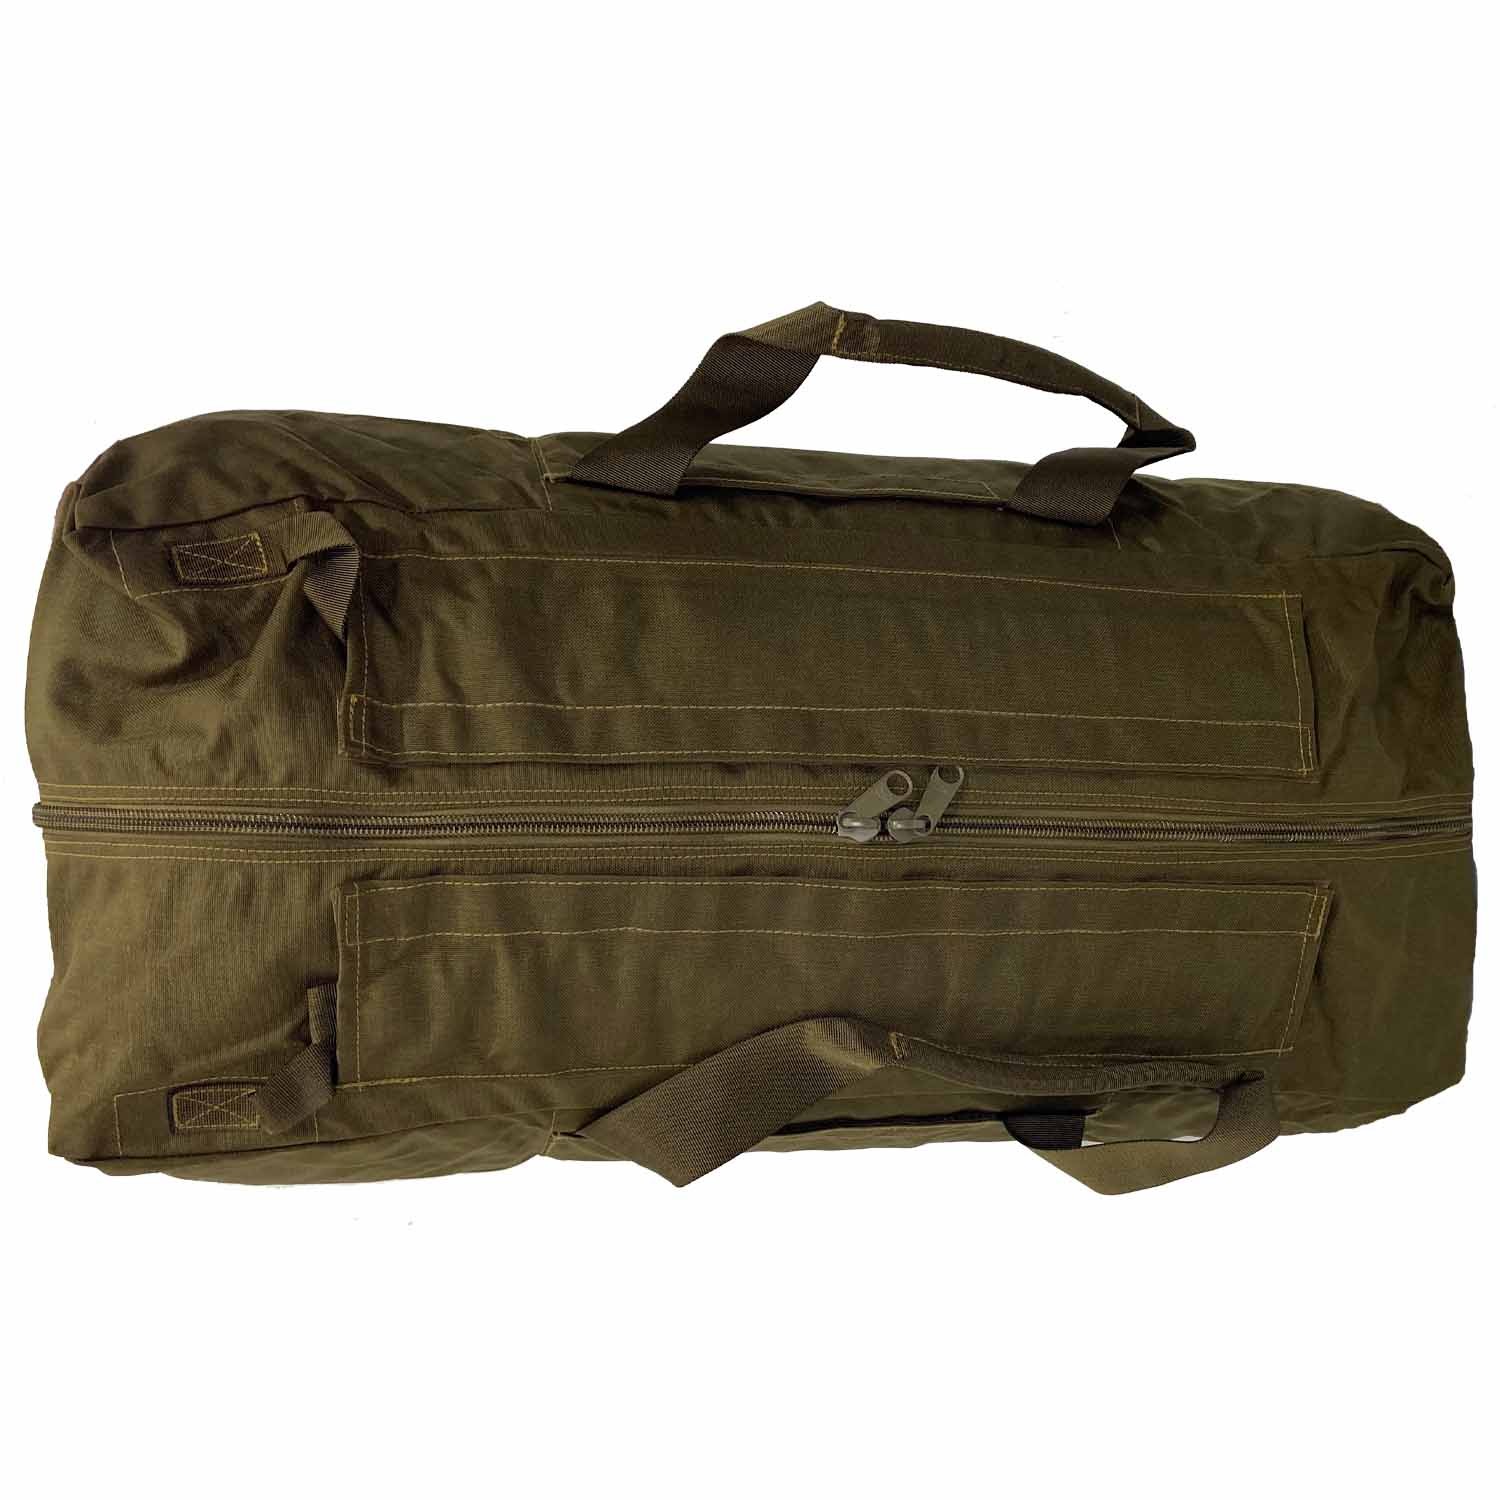 Standard Travel Bag - Coyote